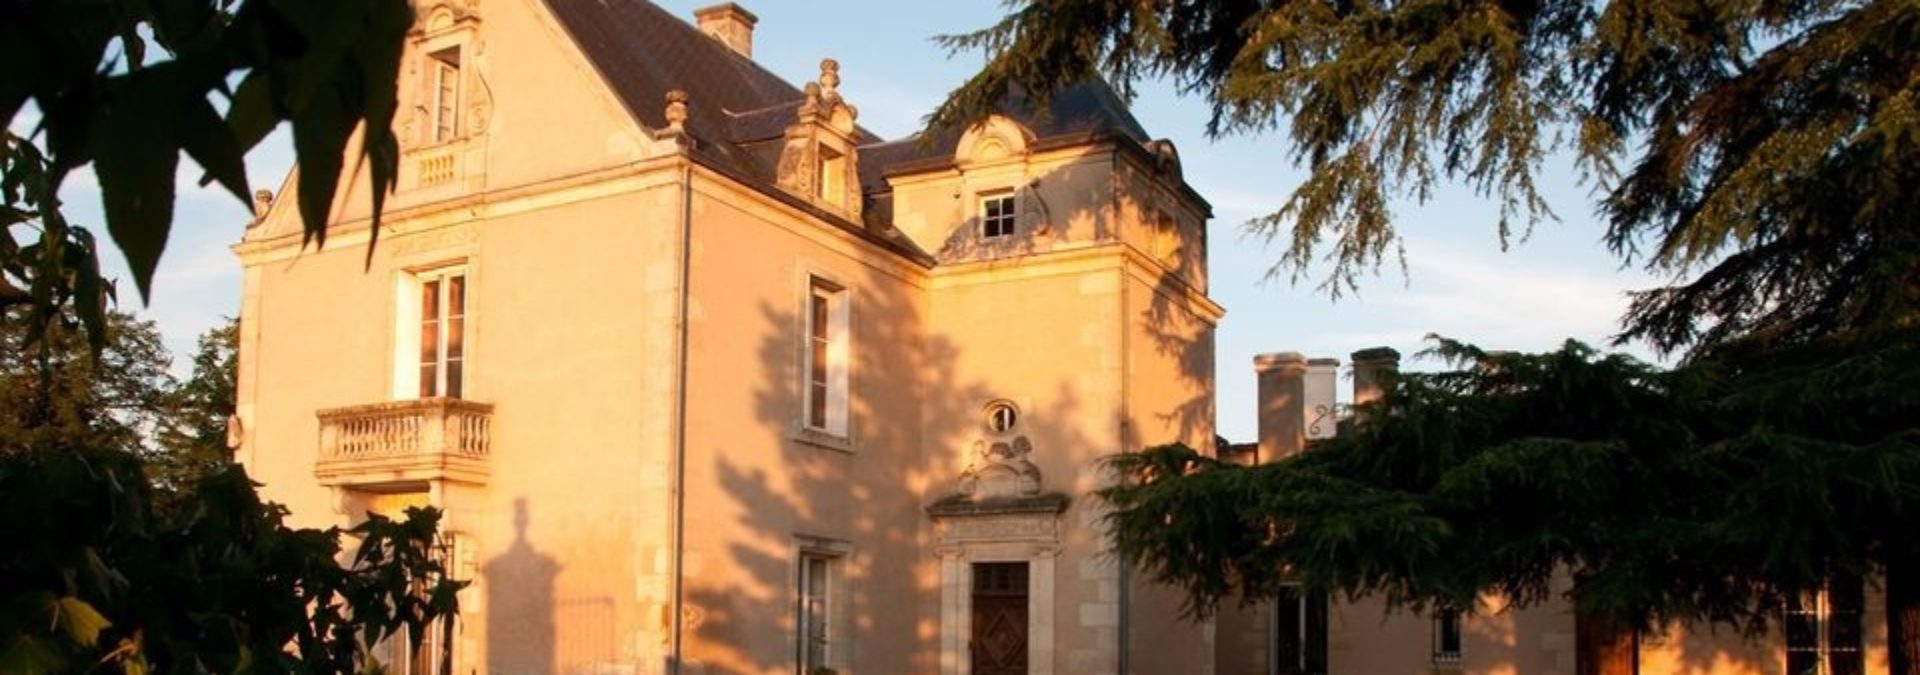 Château La Haye